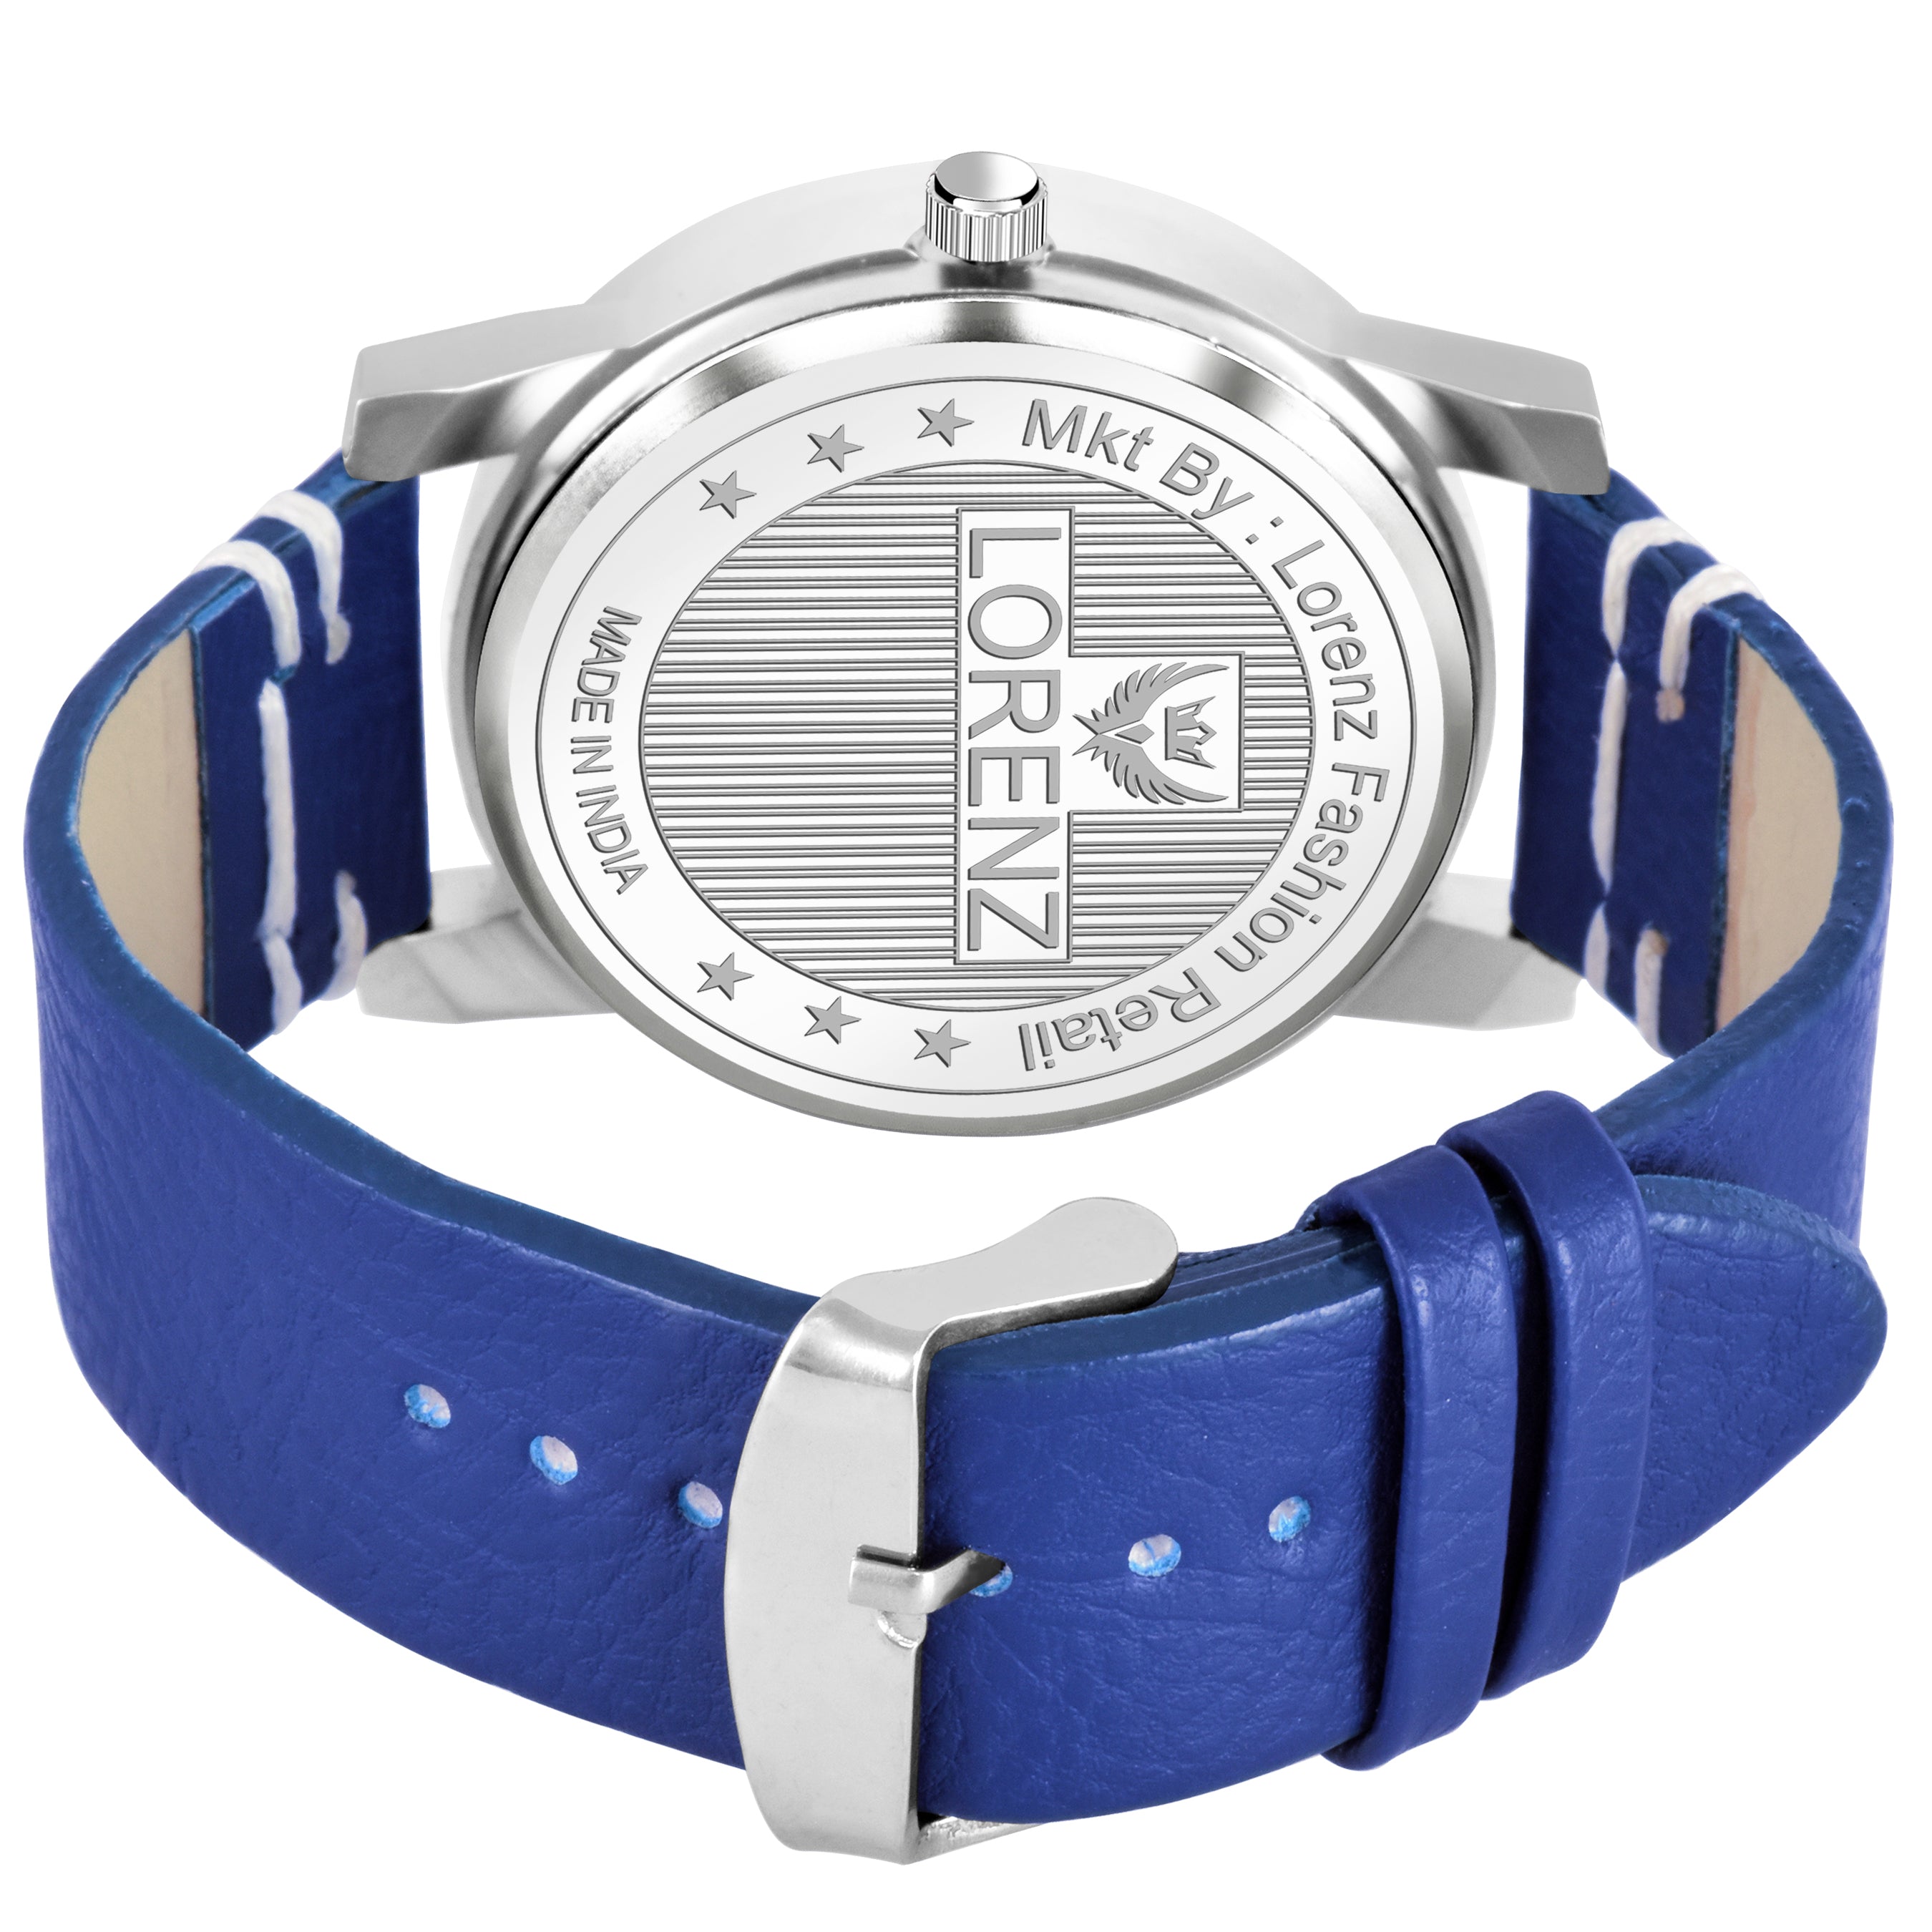 Lorenz Combo of Silver Dial Watch & Blue Wallet for Men- CM-3069WL-50